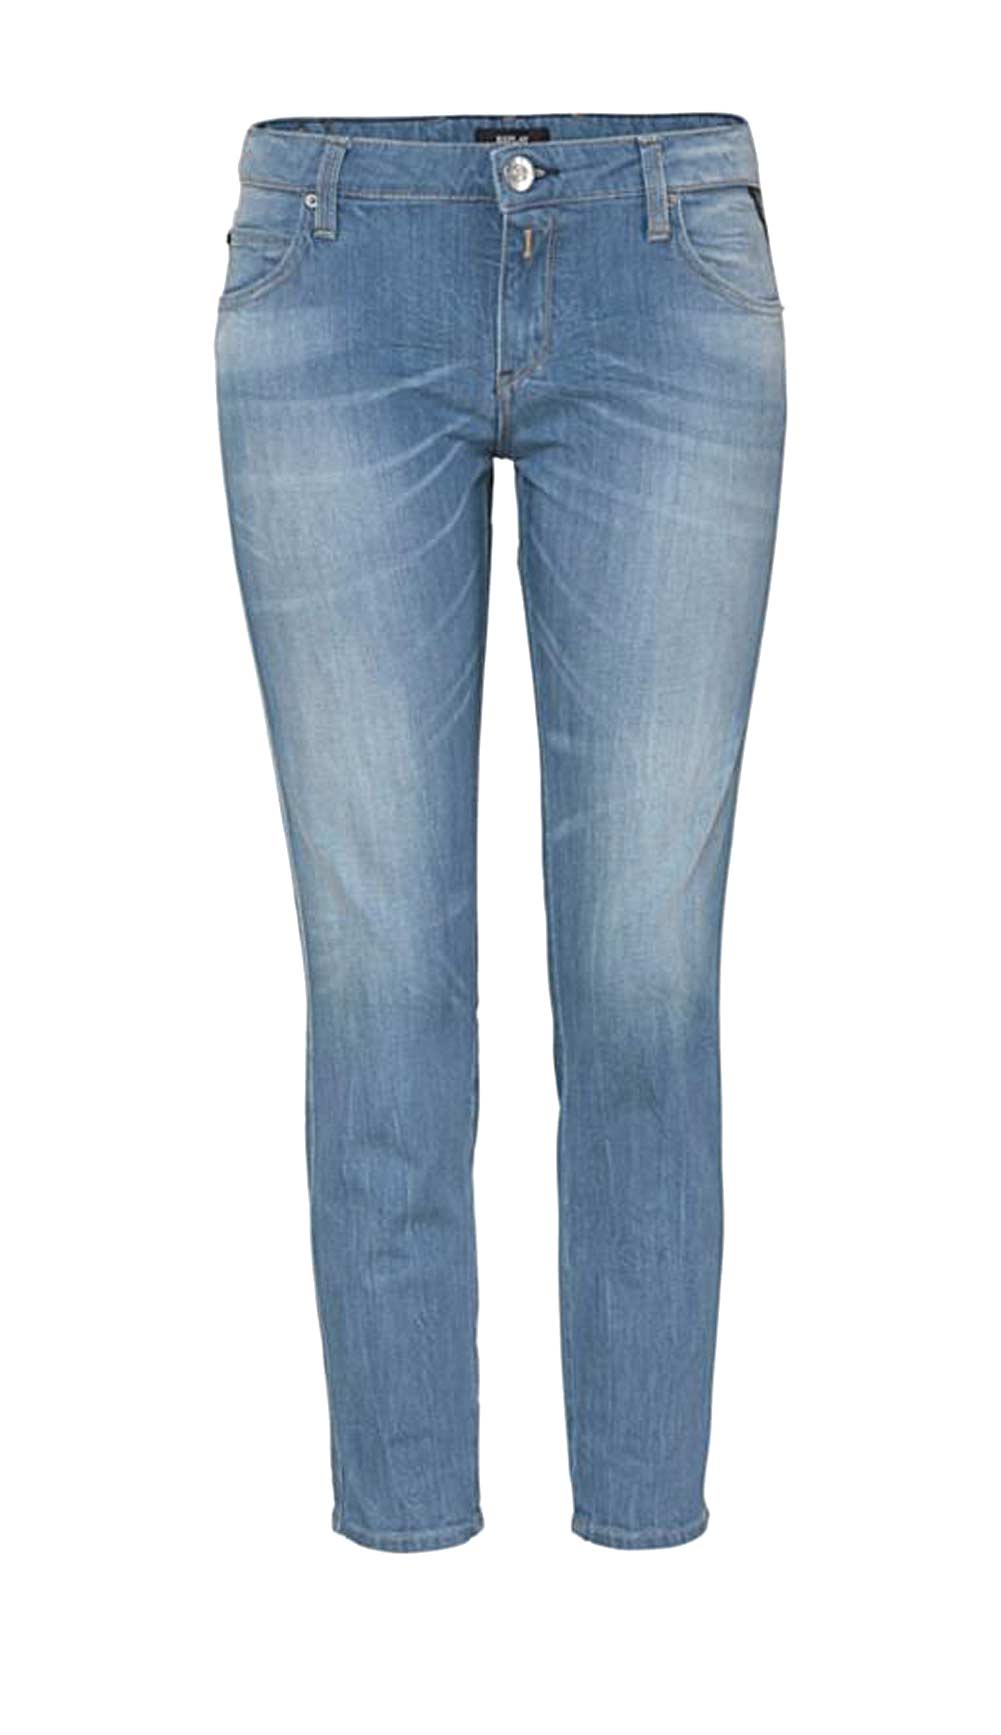 Replay Damen Marken-Jeans "KATEWIN", light-blue, 30 inch